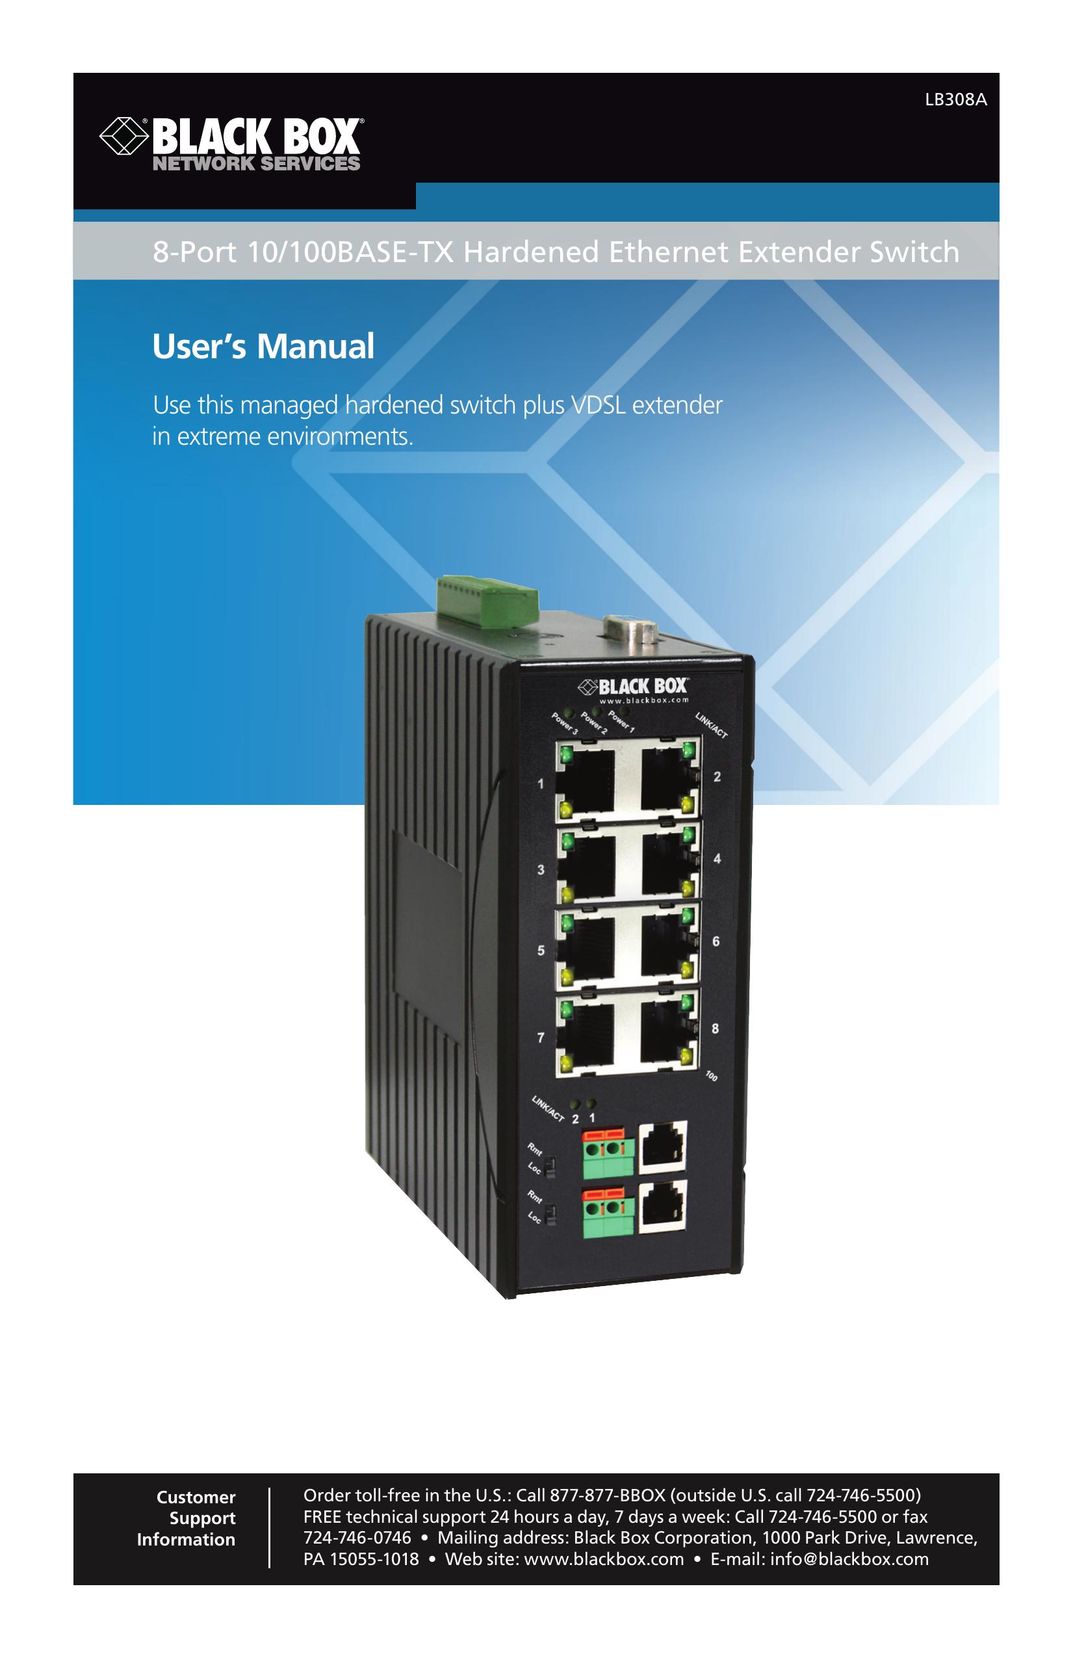 Black Box 8-port 10/100base-tx hardened ethernet extender switch Network Hardware User Manual